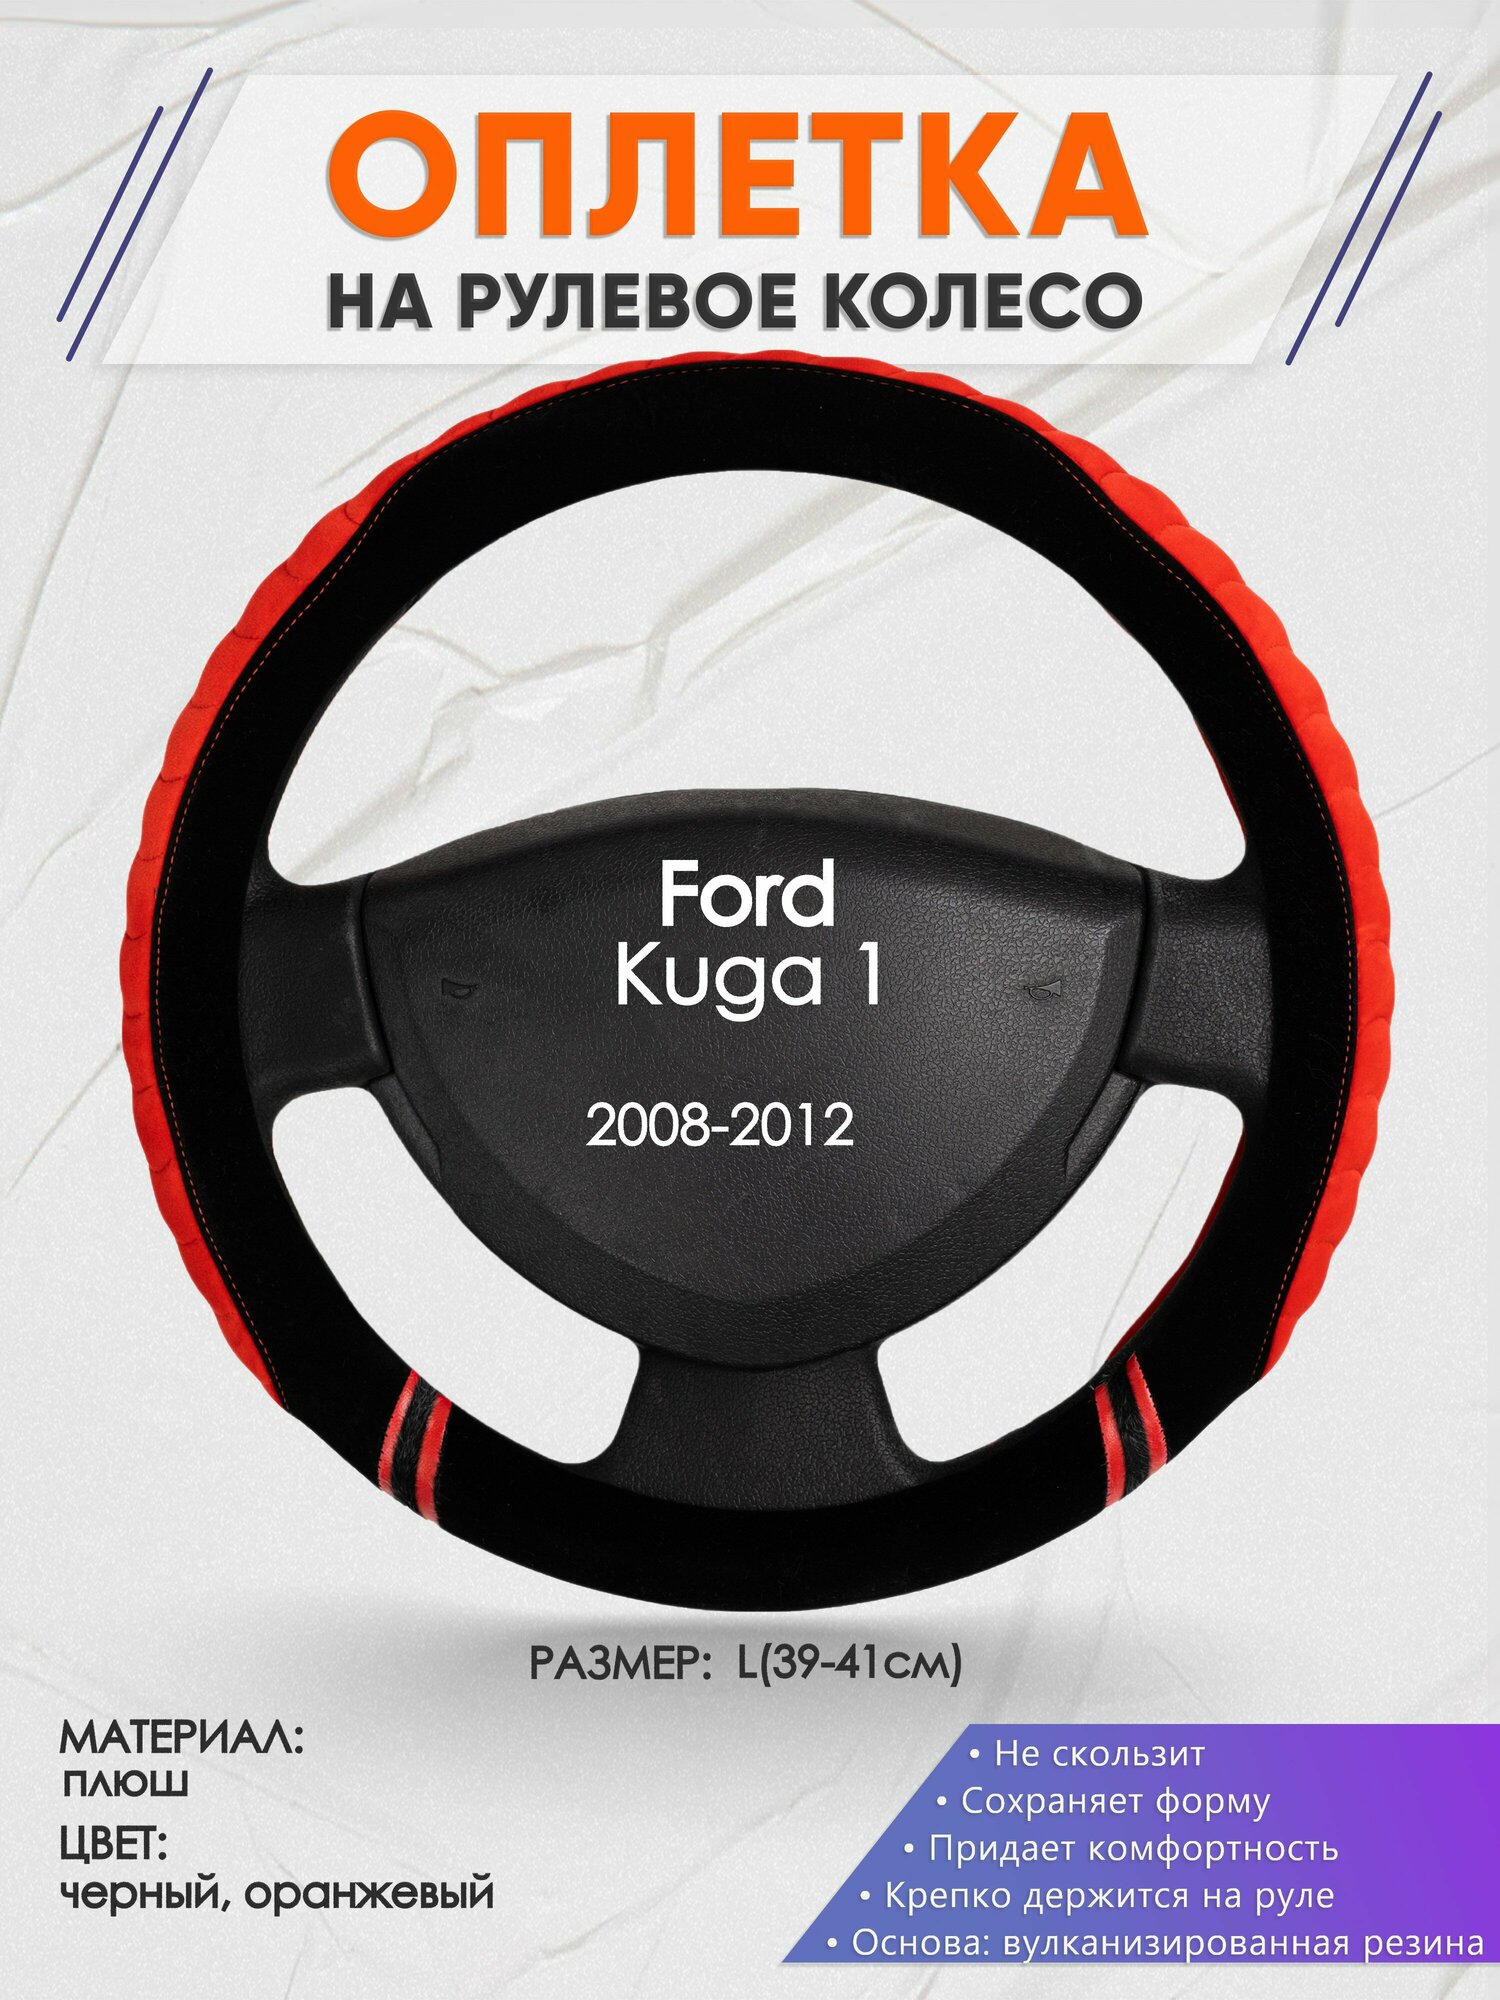 Оплетка на руль для Ford Kuga 1(Форд Куга 1) 2008-2012, L(39-41см), Замша 36